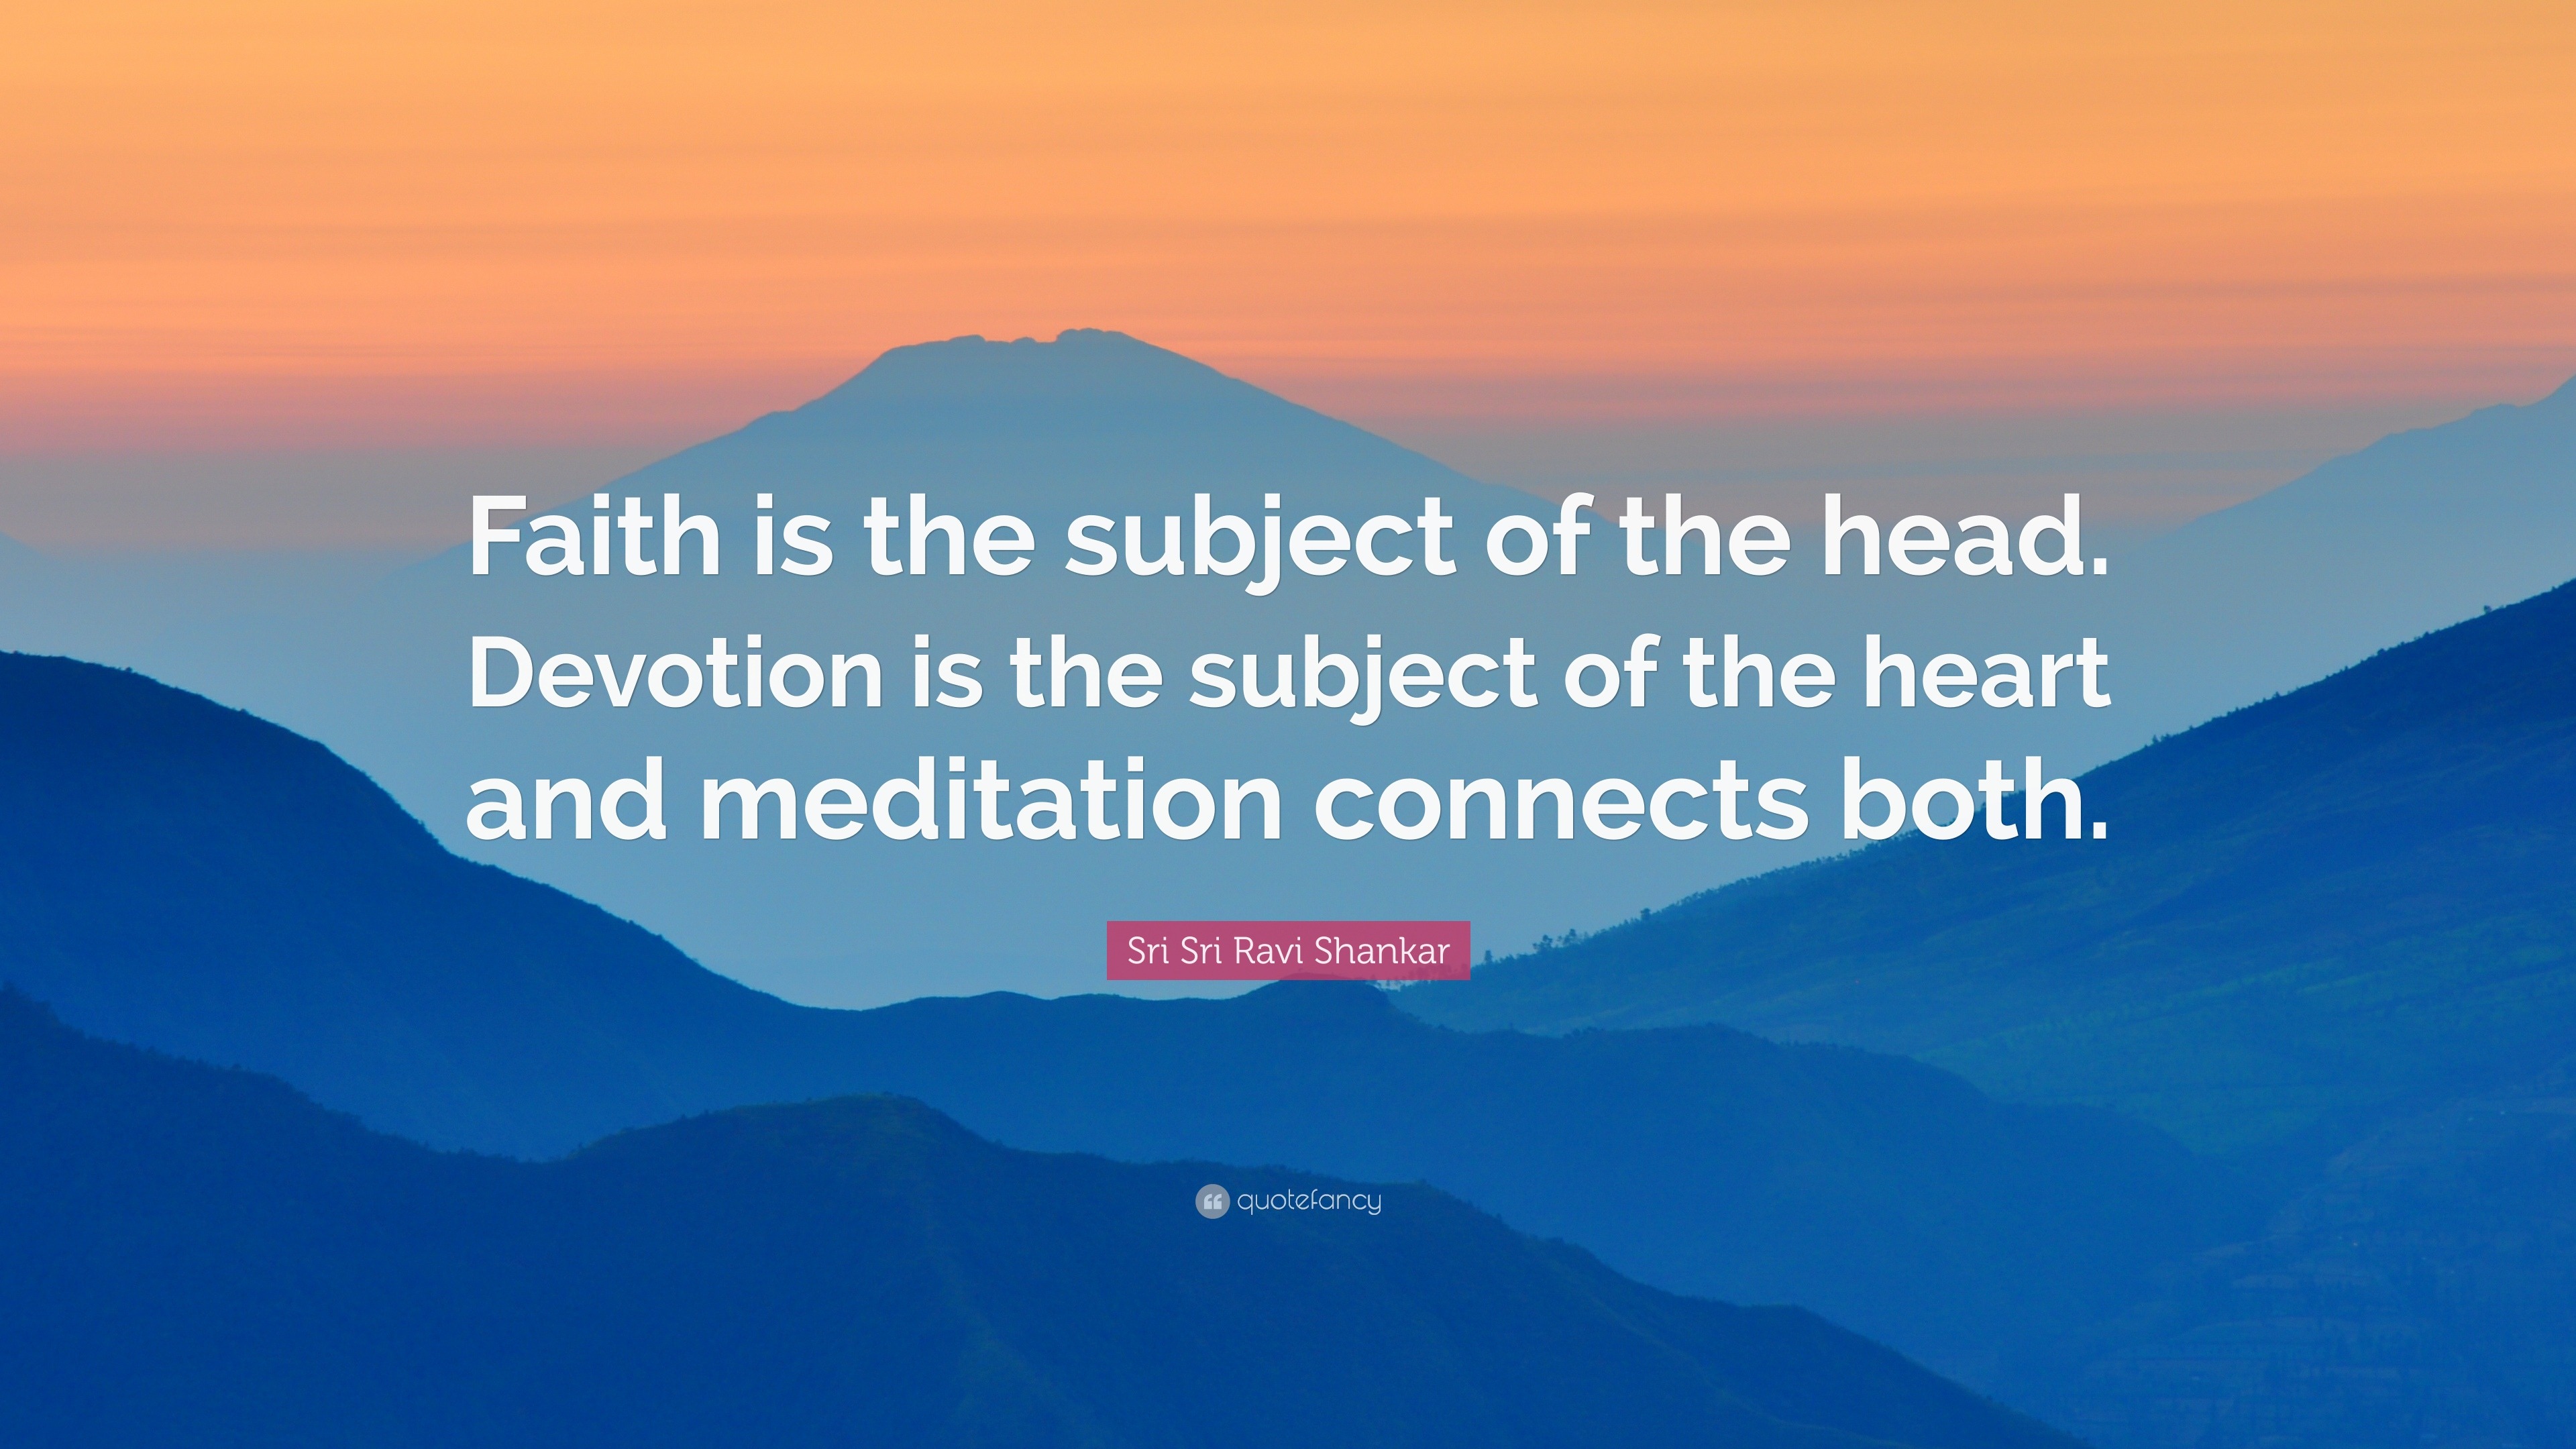 Sri Sri Ravi Shankar Quote: “Faith is the subject of the head